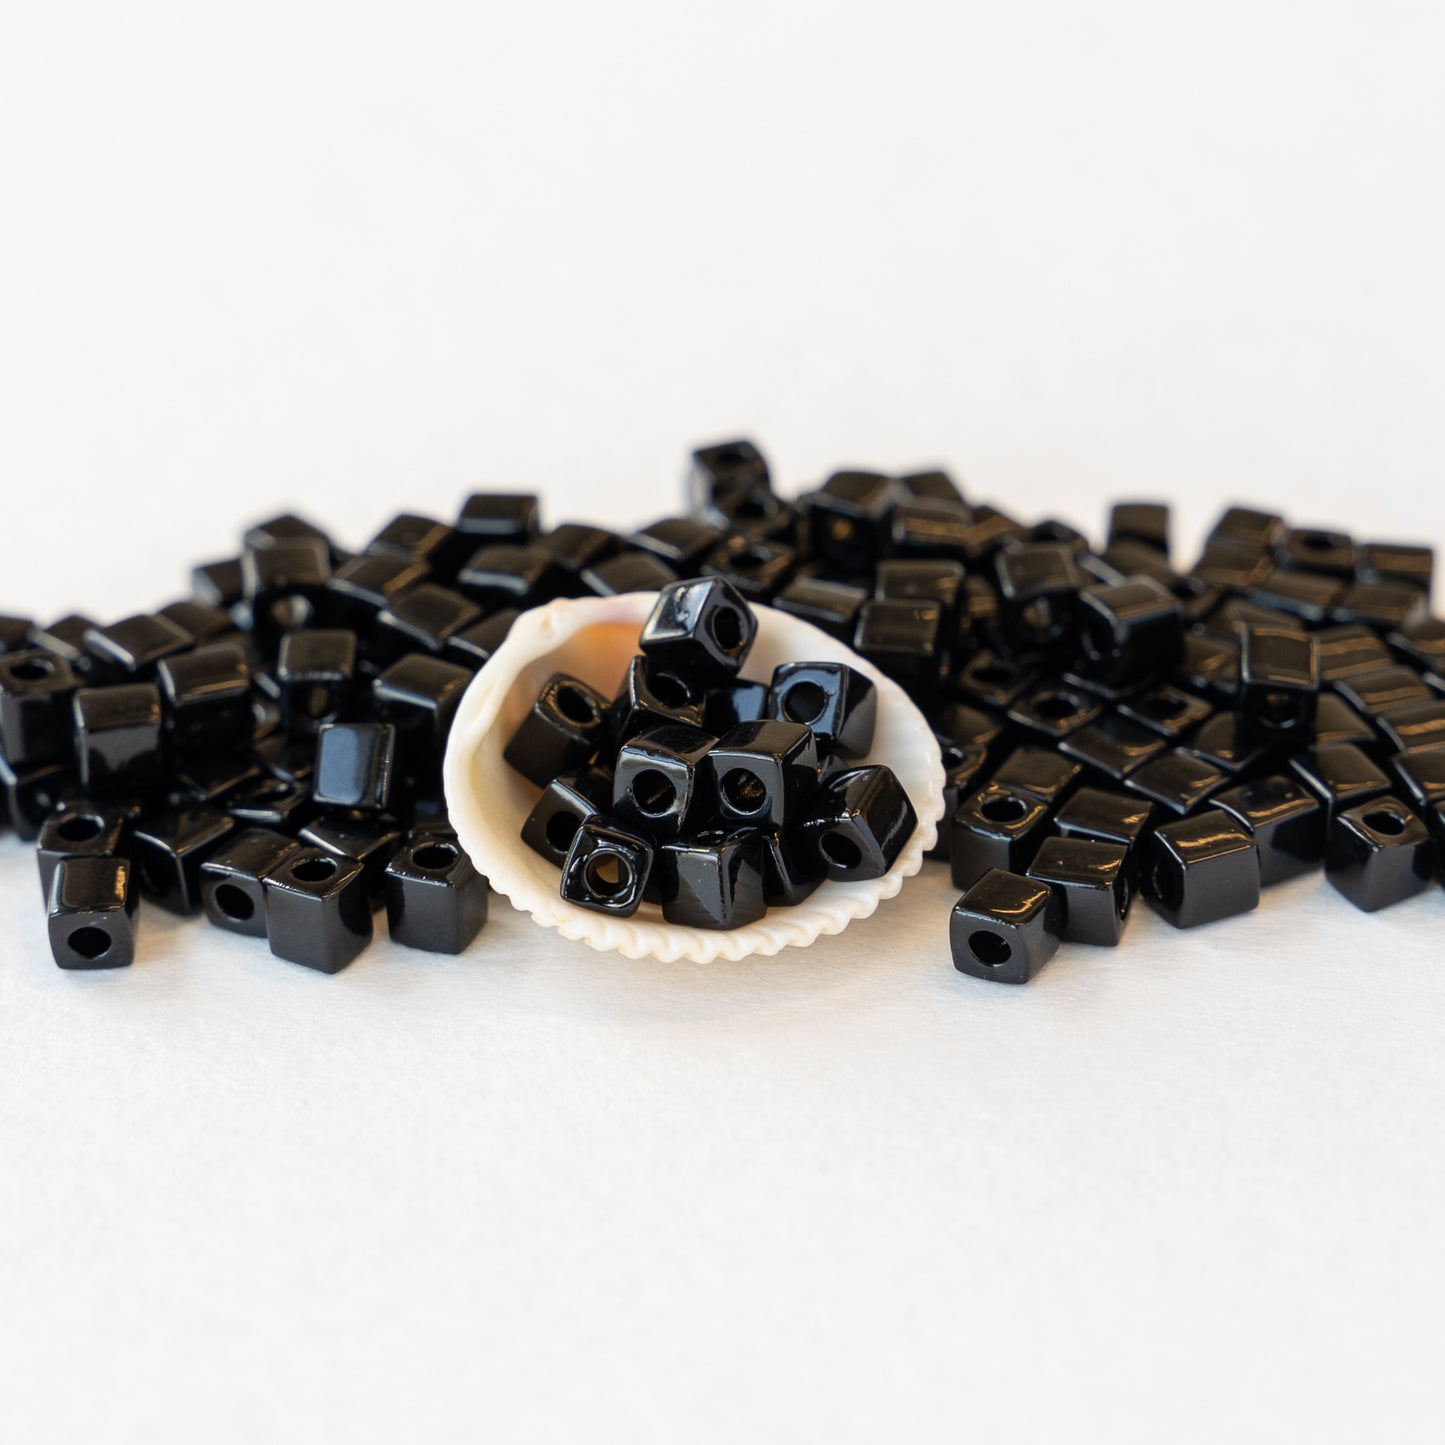 4mm Miyuki Cube Beads  - Black - 20 0r 40 grams